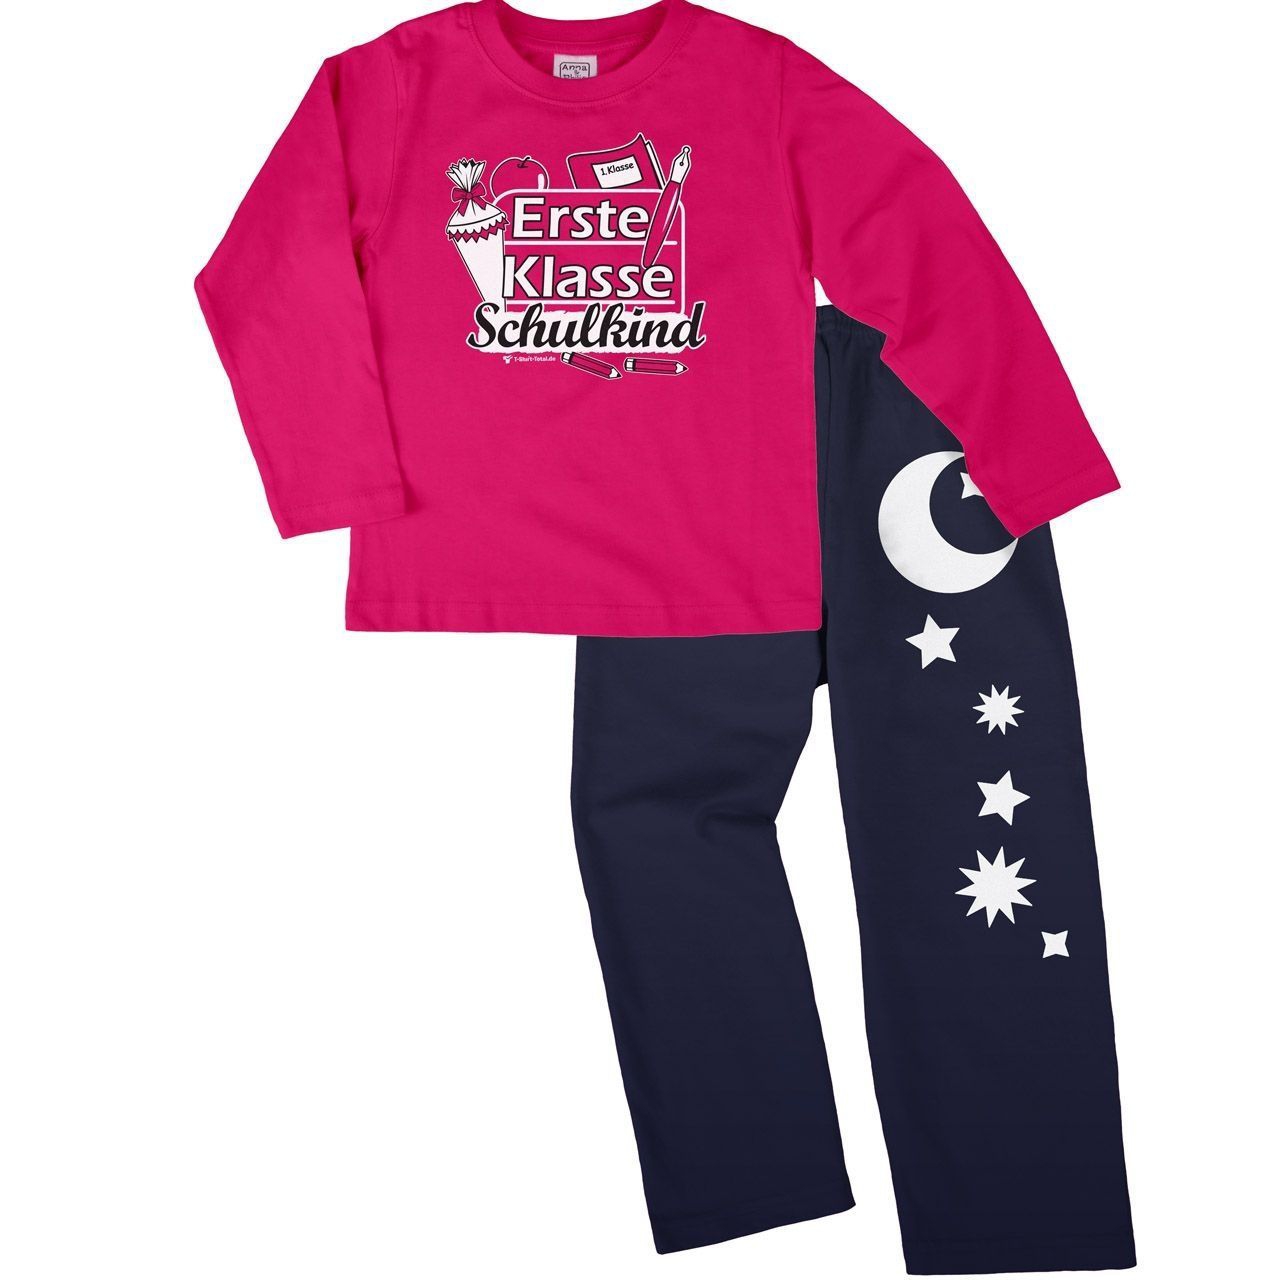 Erste Klasse Schulkind Pyjama Set pink / navy 122 / 128